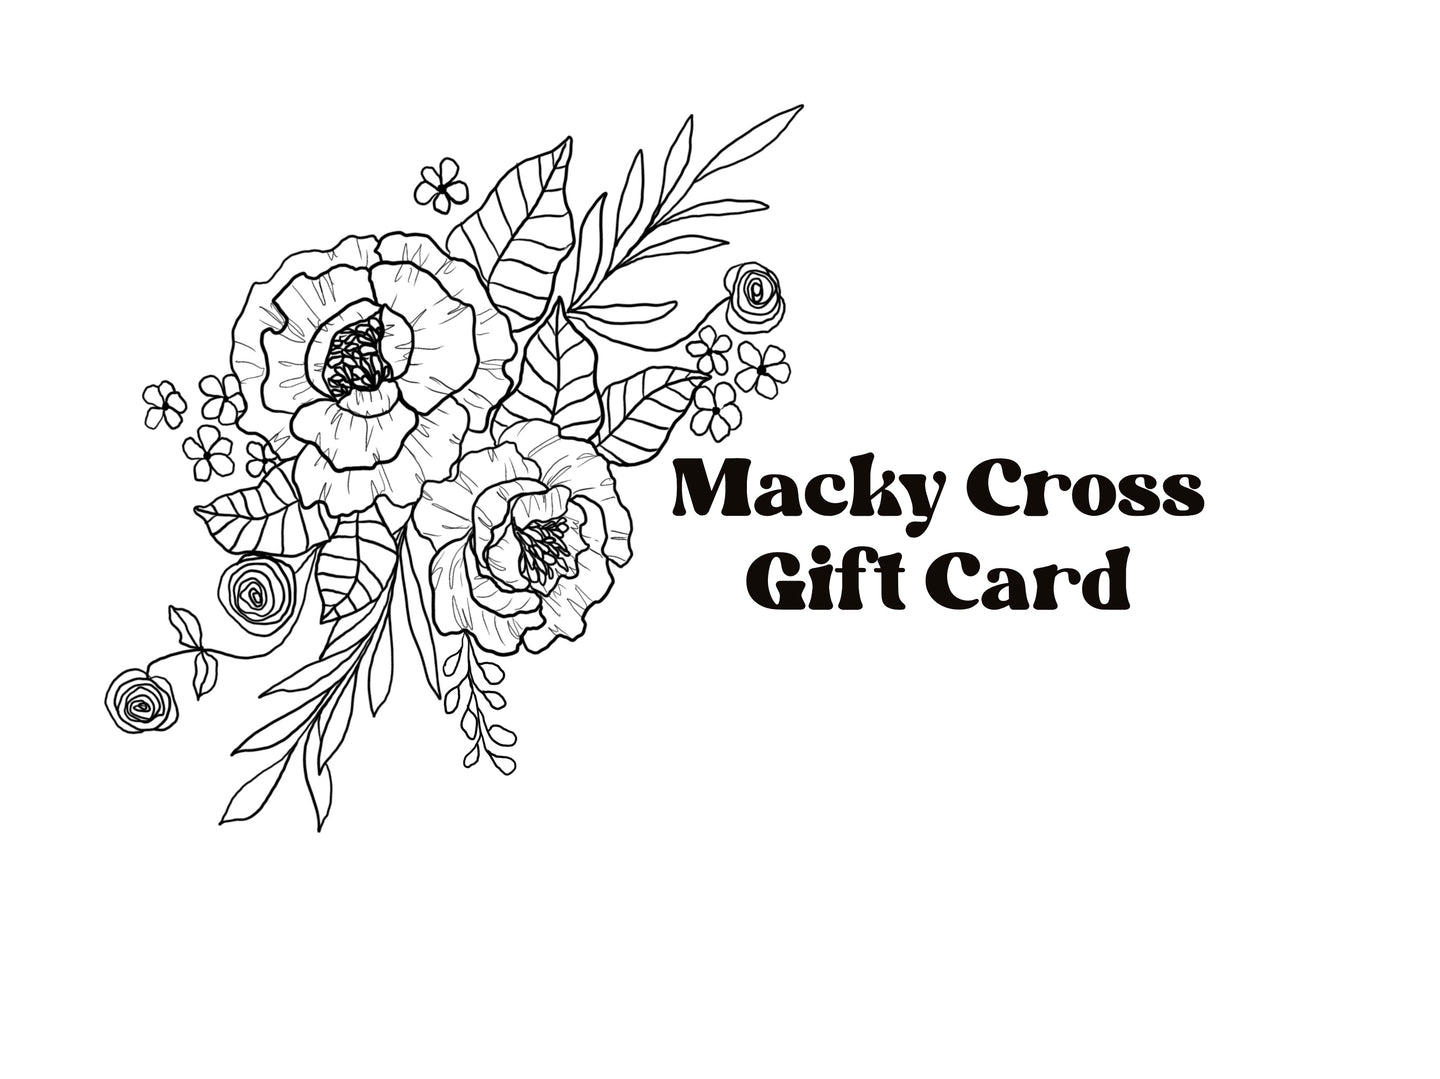 Macky Cross Gift Card